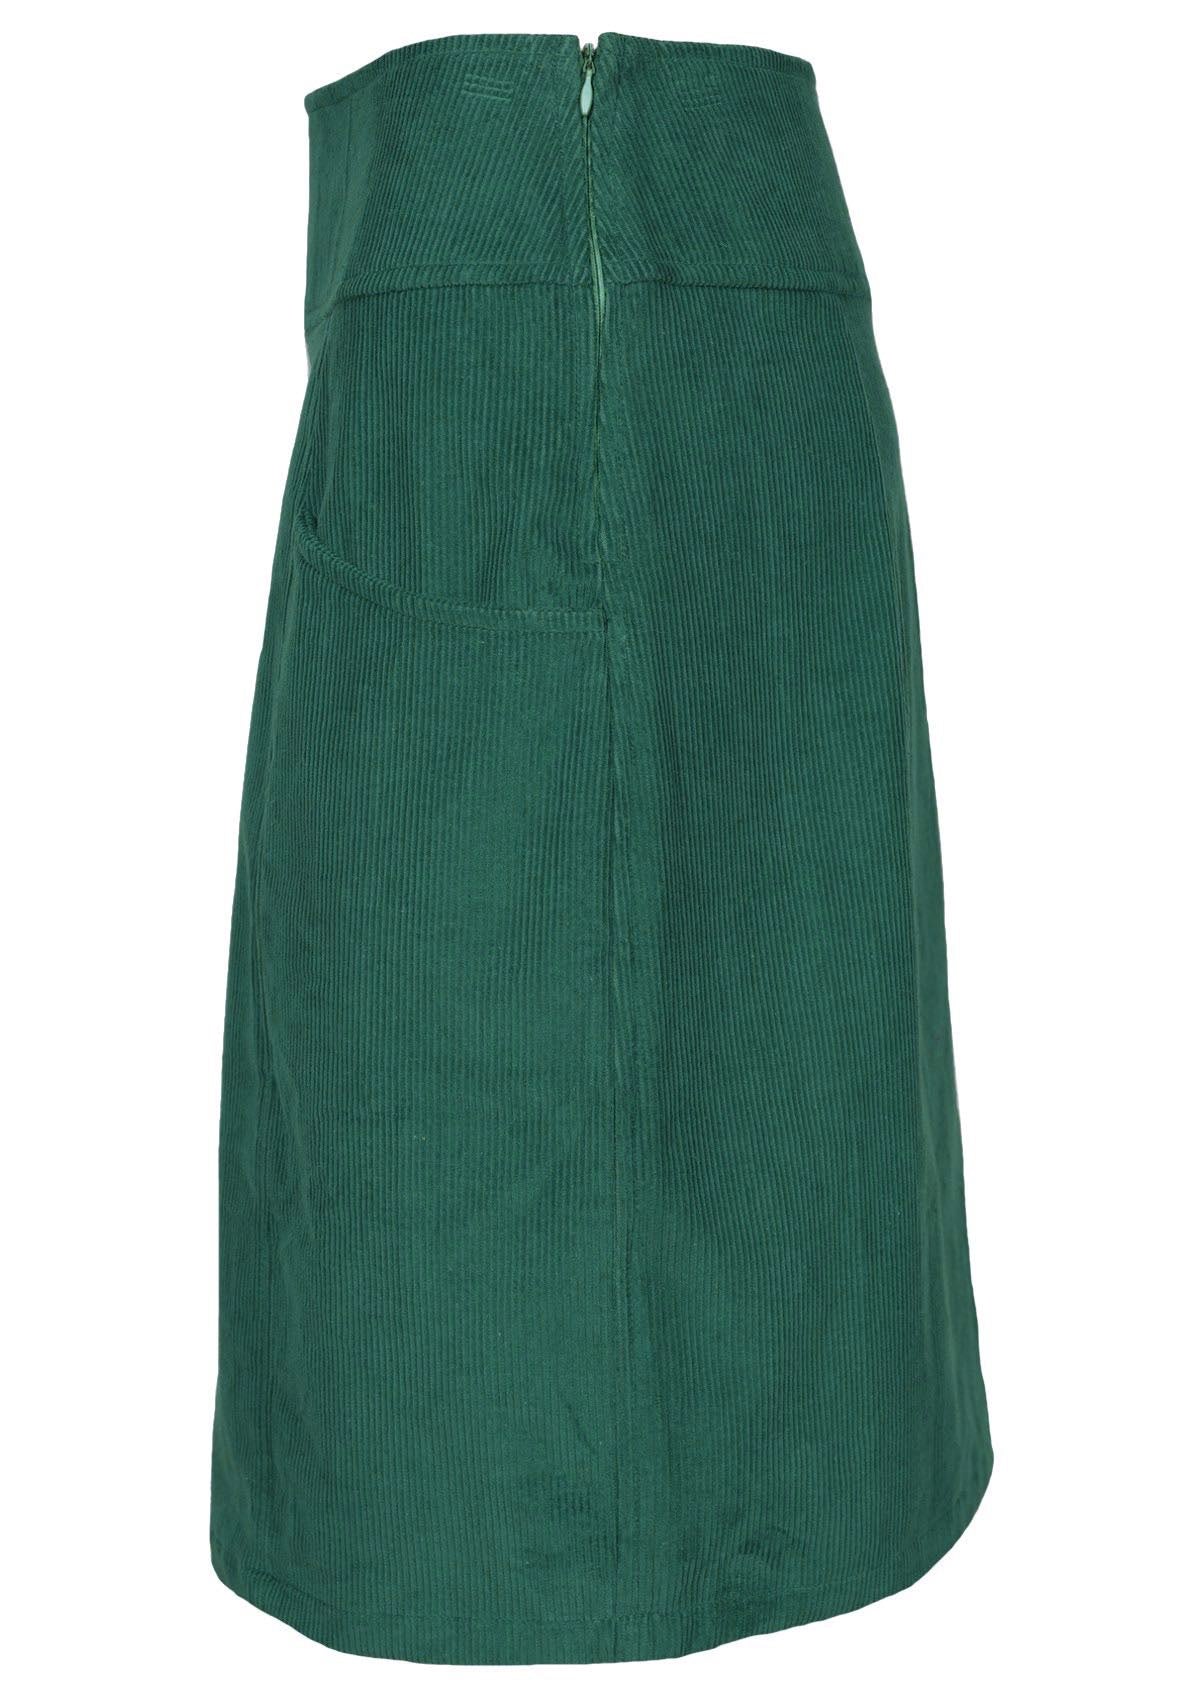 Green corduroy skirt features pockets and a hidden side zip. 